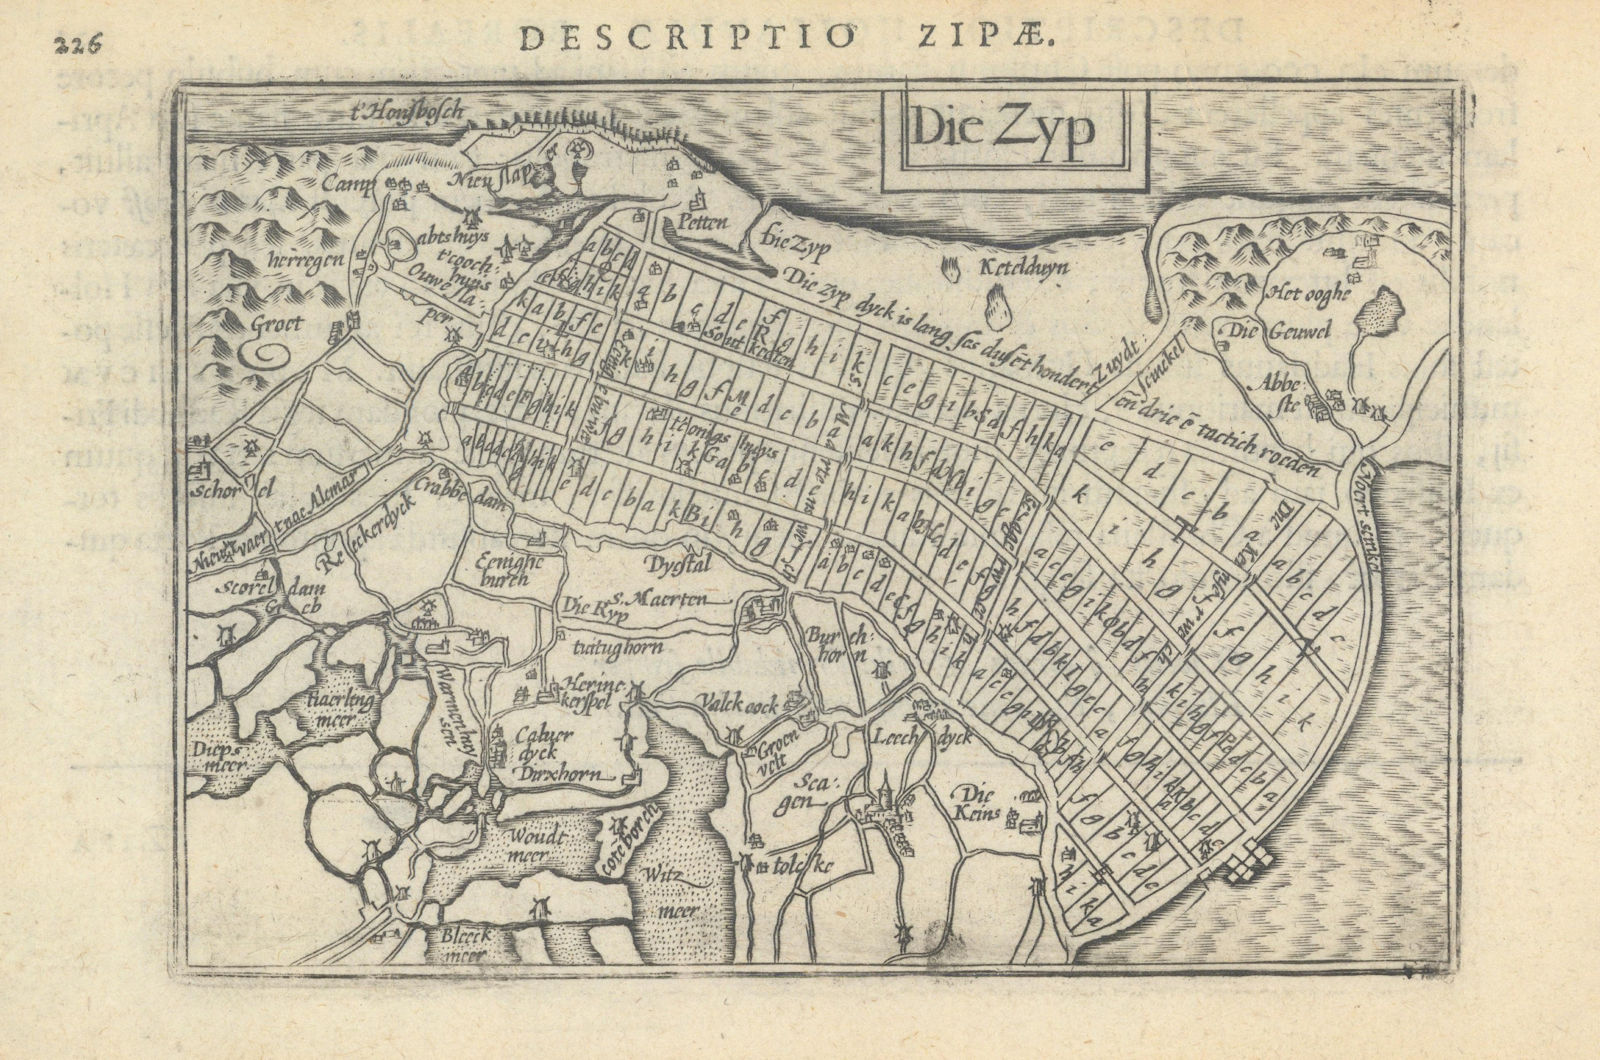 Zipae / Die Zyp by Bertius/Langenes. Zijpe, now Schagen, North Holland 1603 map